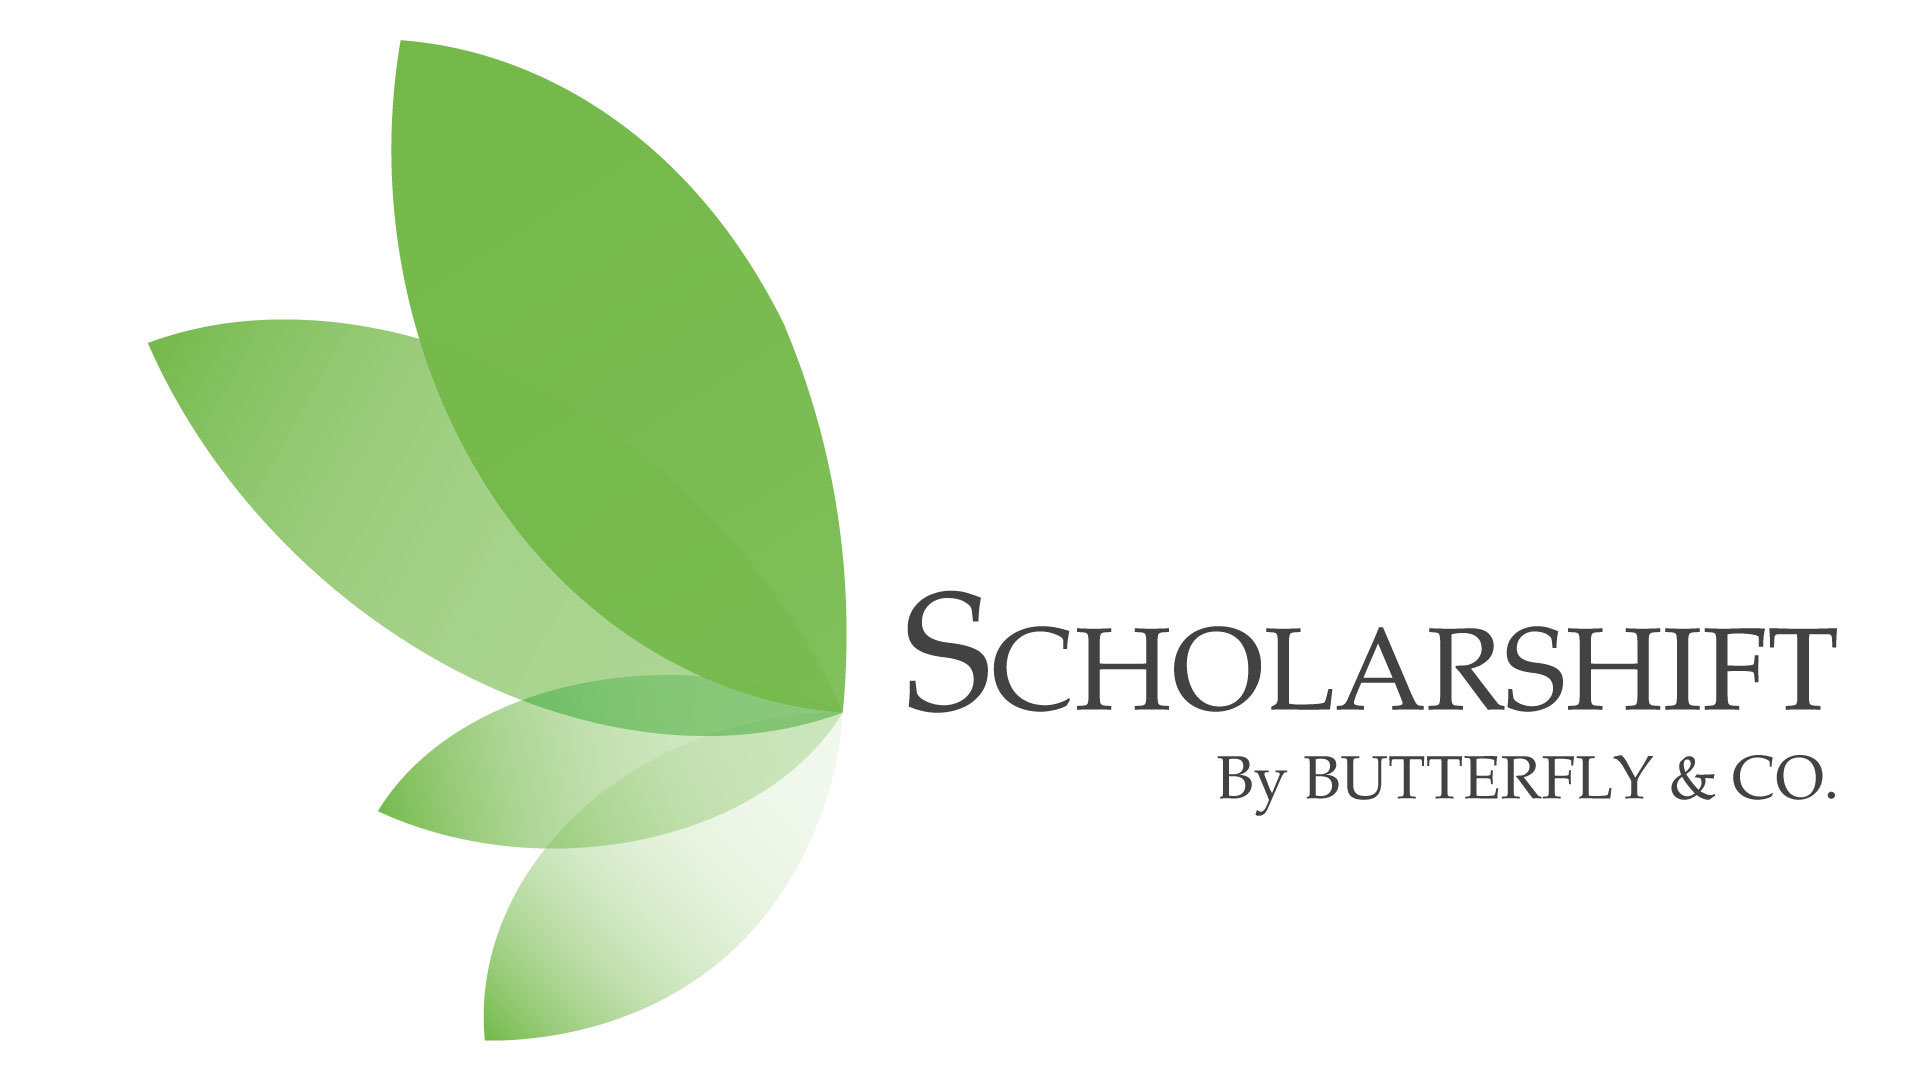 Buttefly&Co - Logo Scholarshift